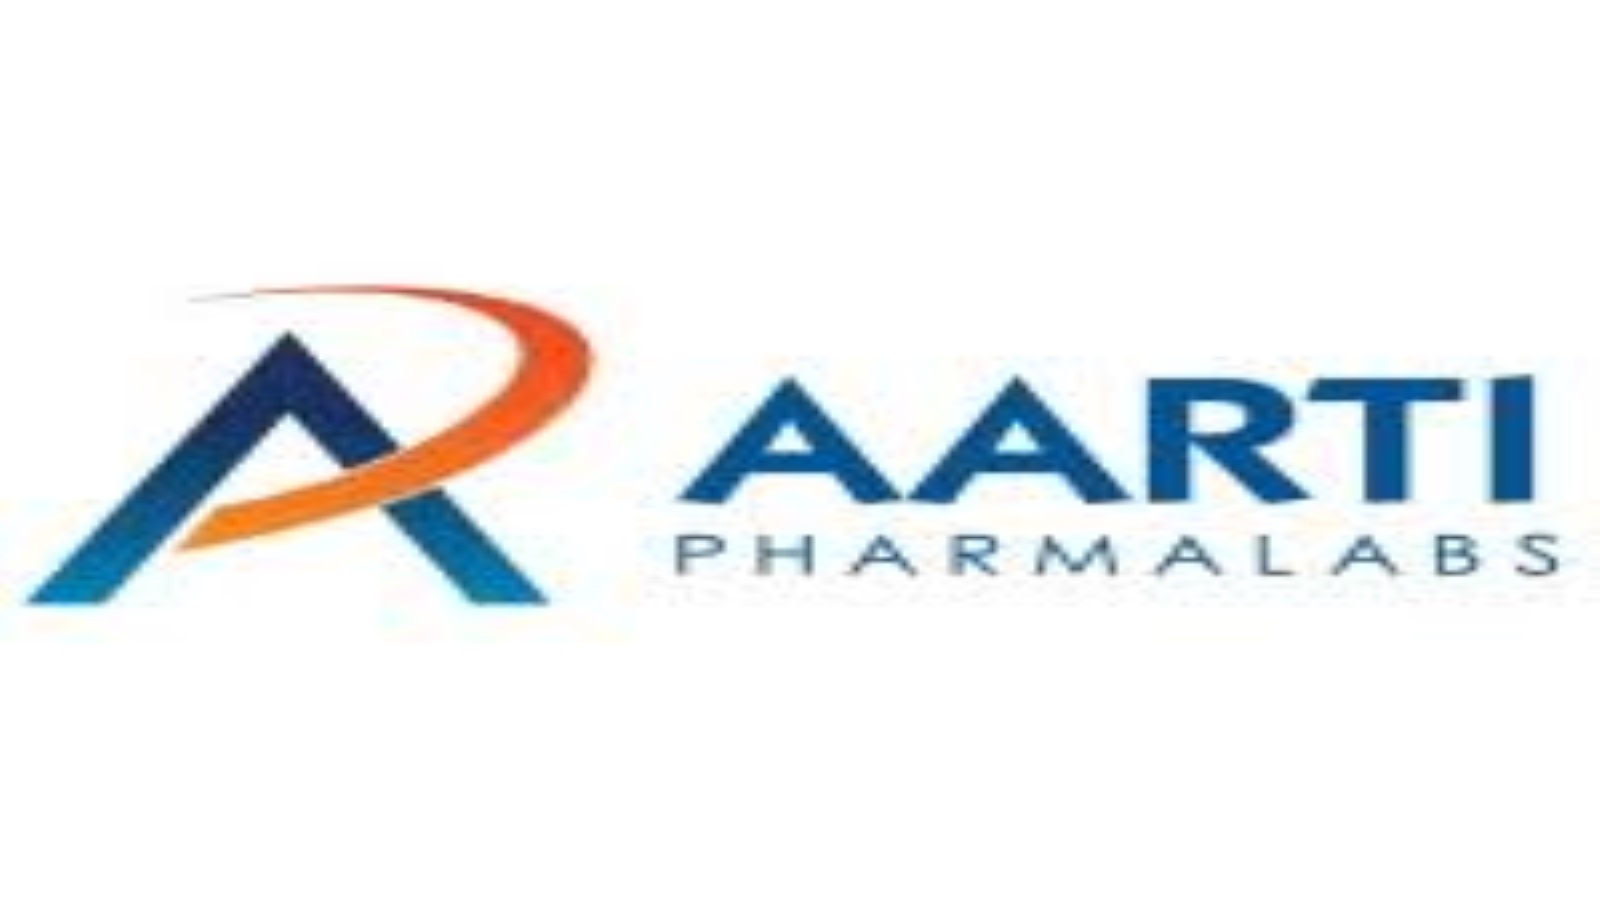 Aarti Pharmalabs